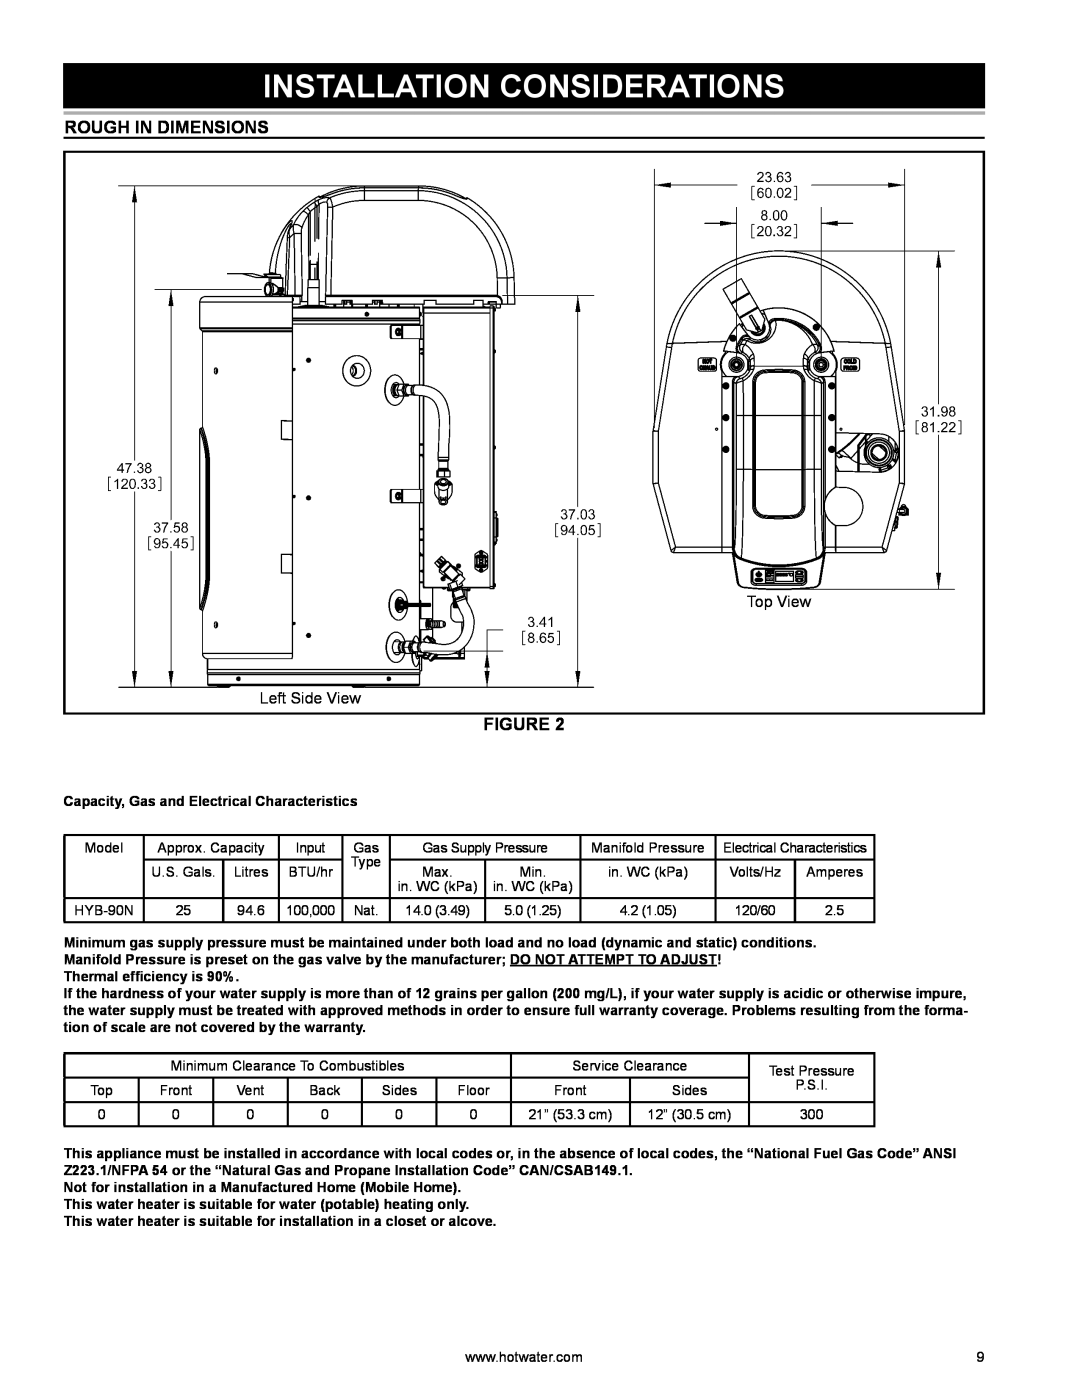 A.O. Smith HYB-90N warranty Installation Considerations, Rough In Dimensions 